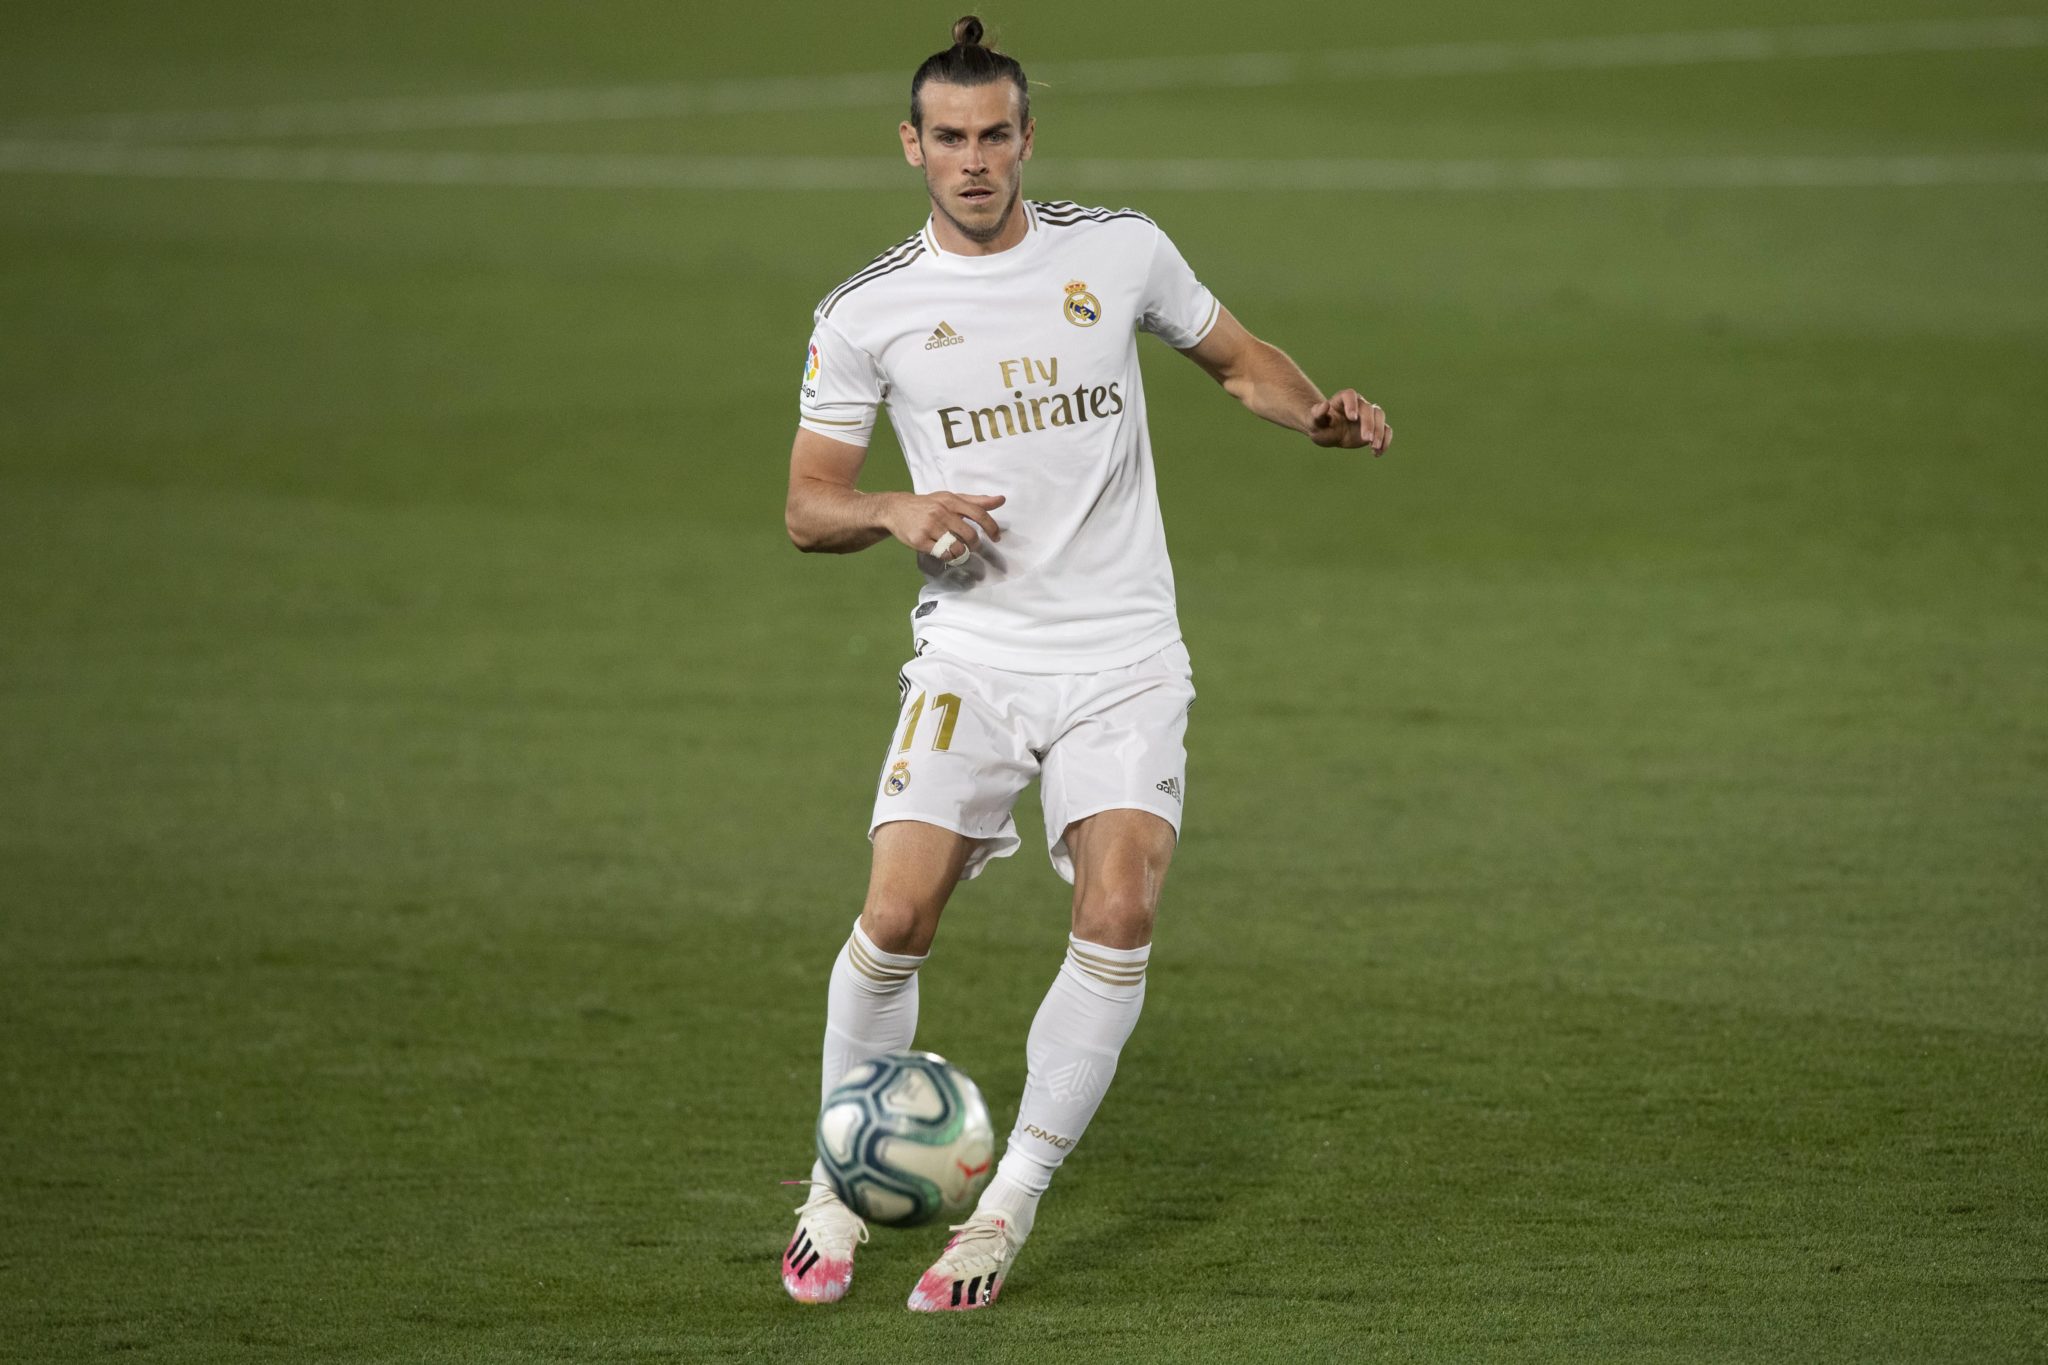 Carlo Ancelotti has given Gareth Bale hope of Madrid return